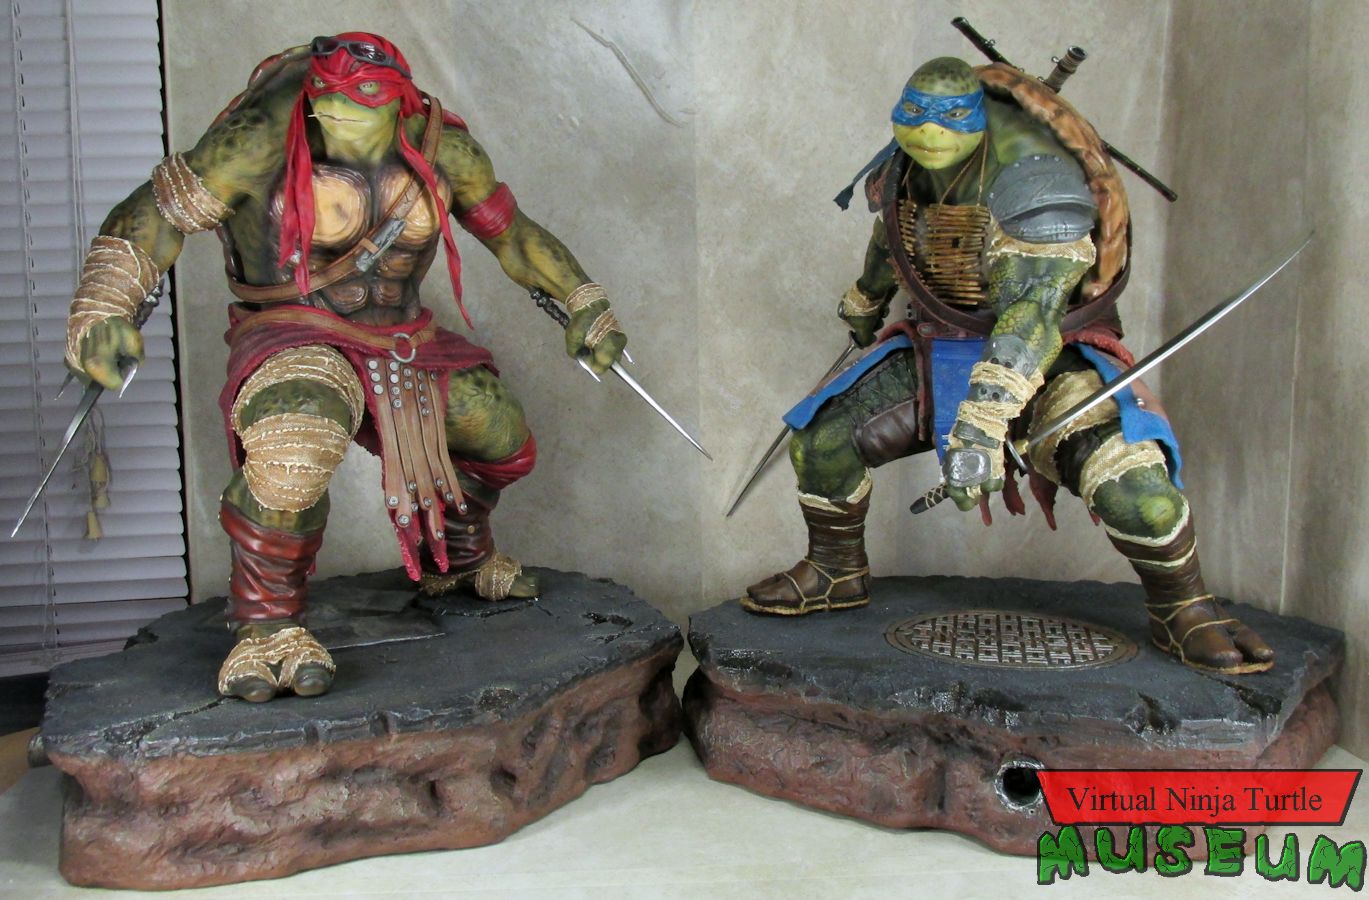 Leonardo & Raphael together